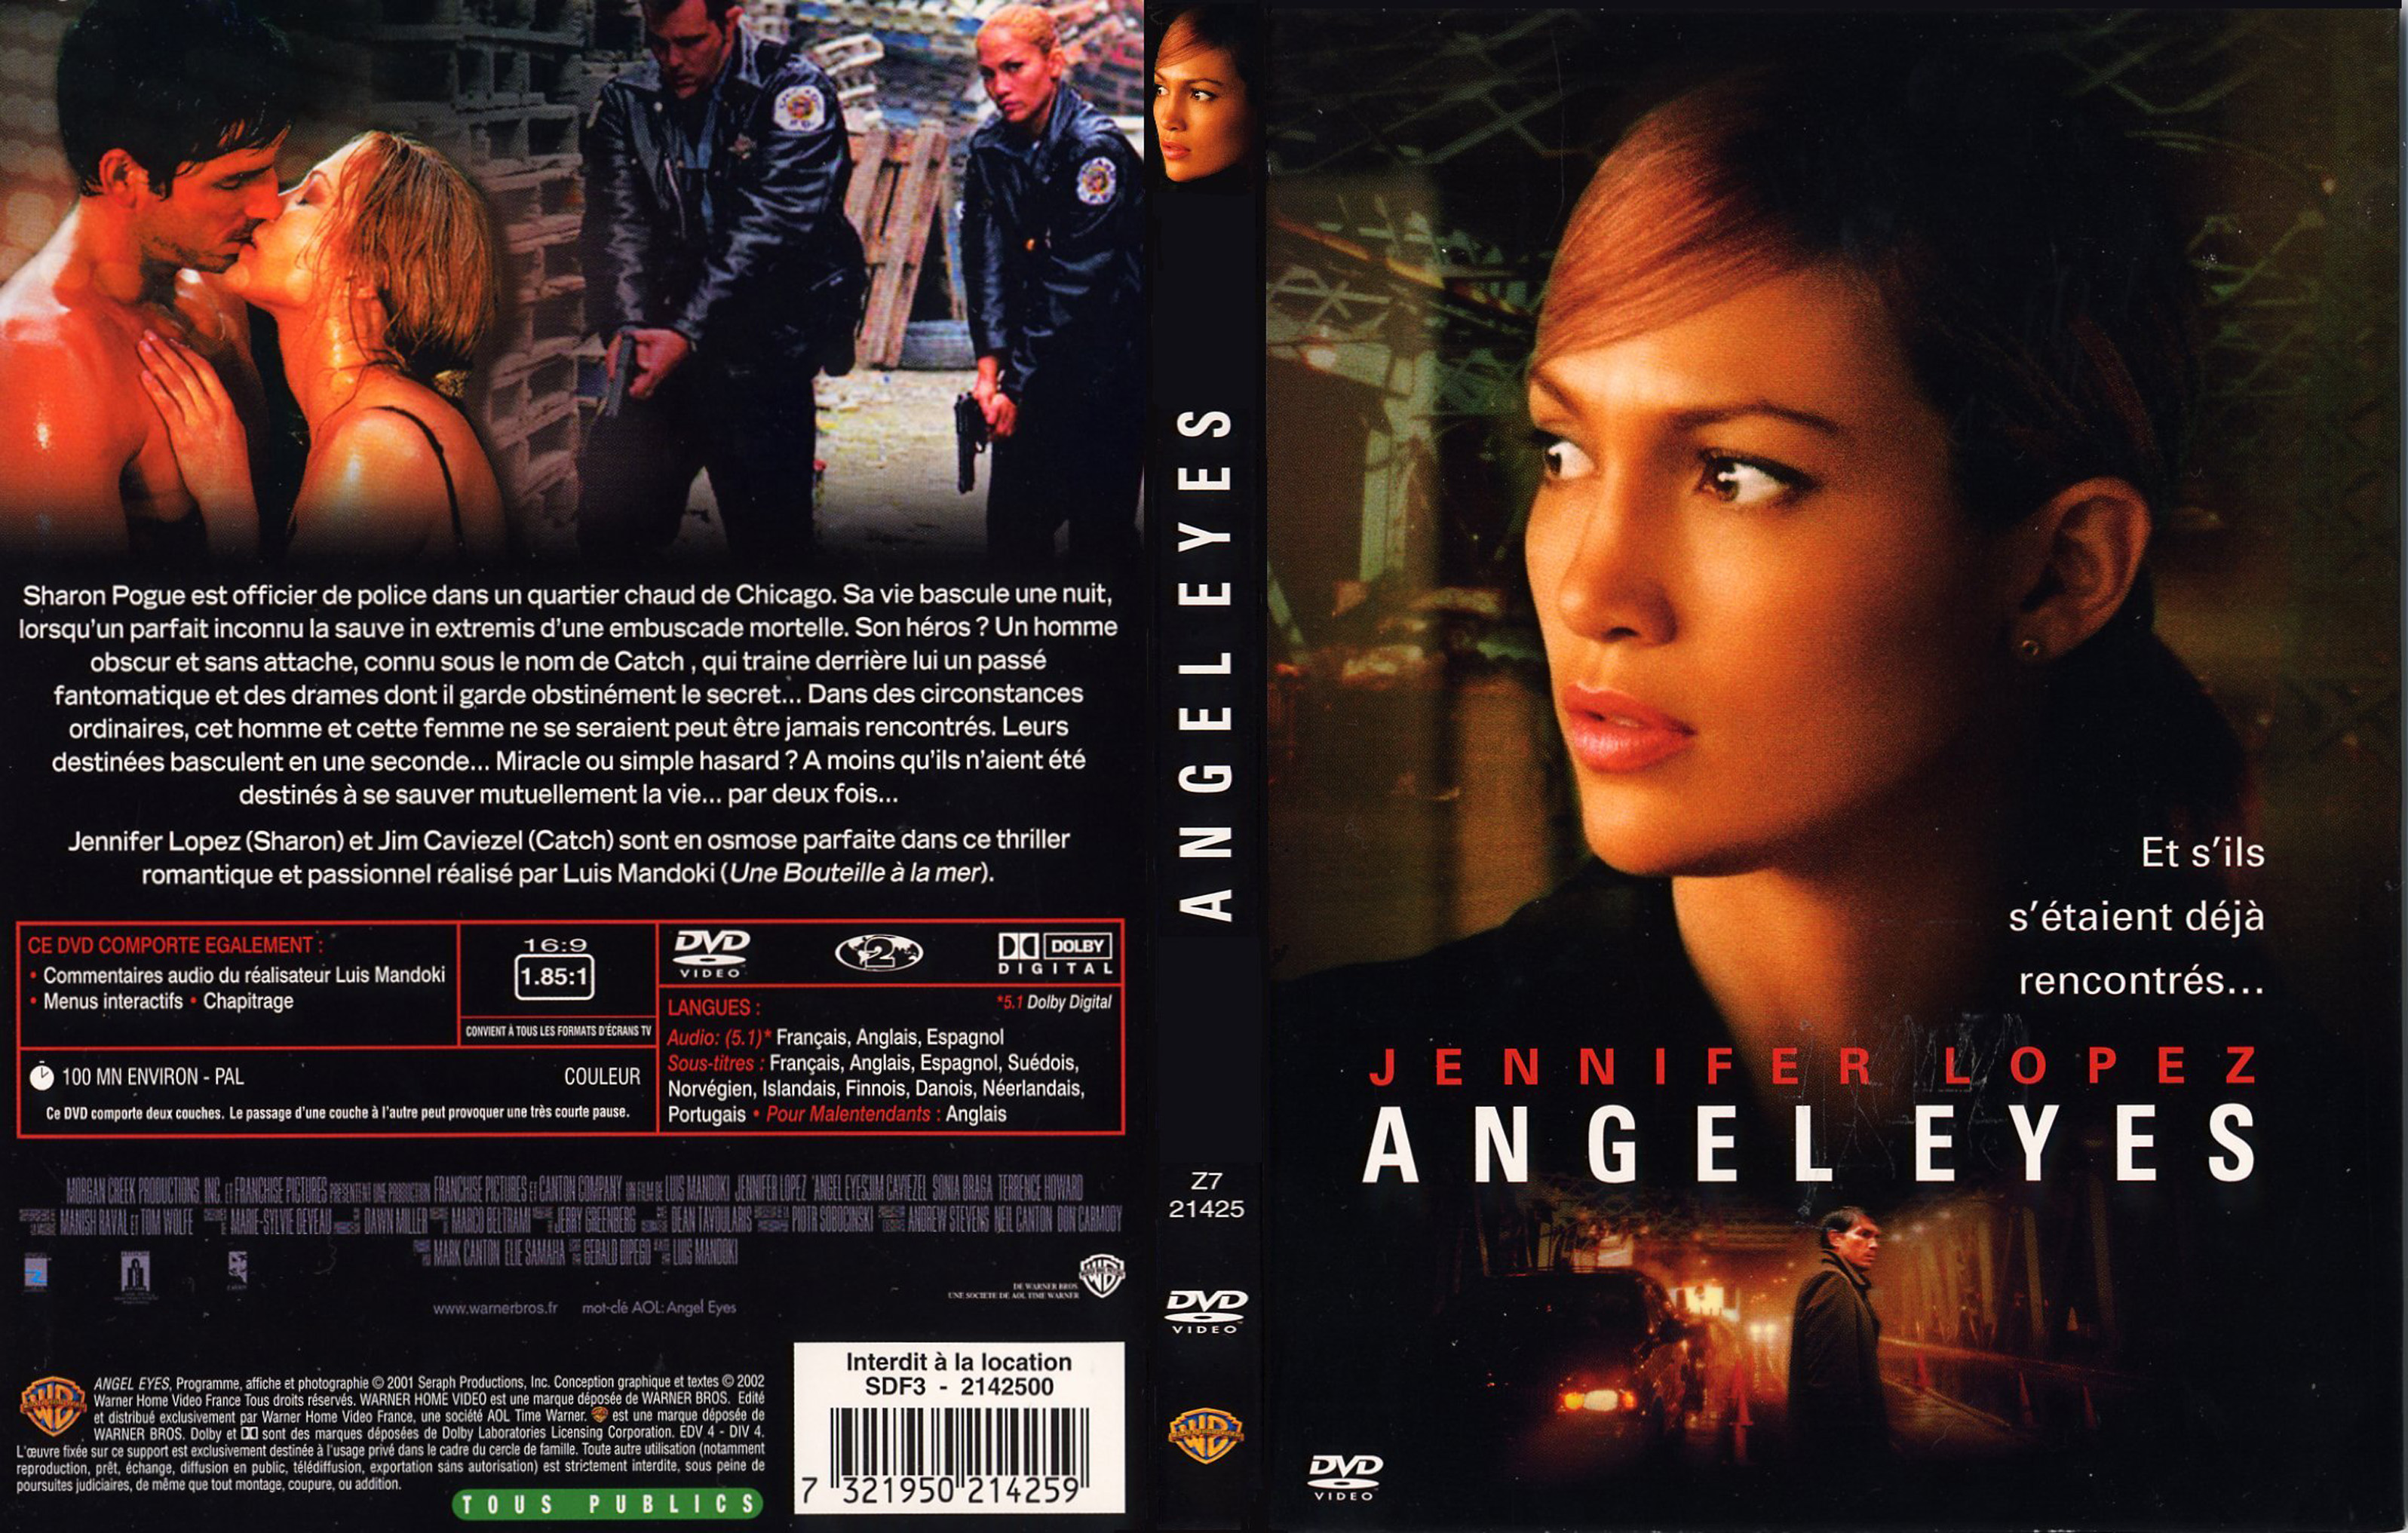 Jaquette DVD Angel eyes